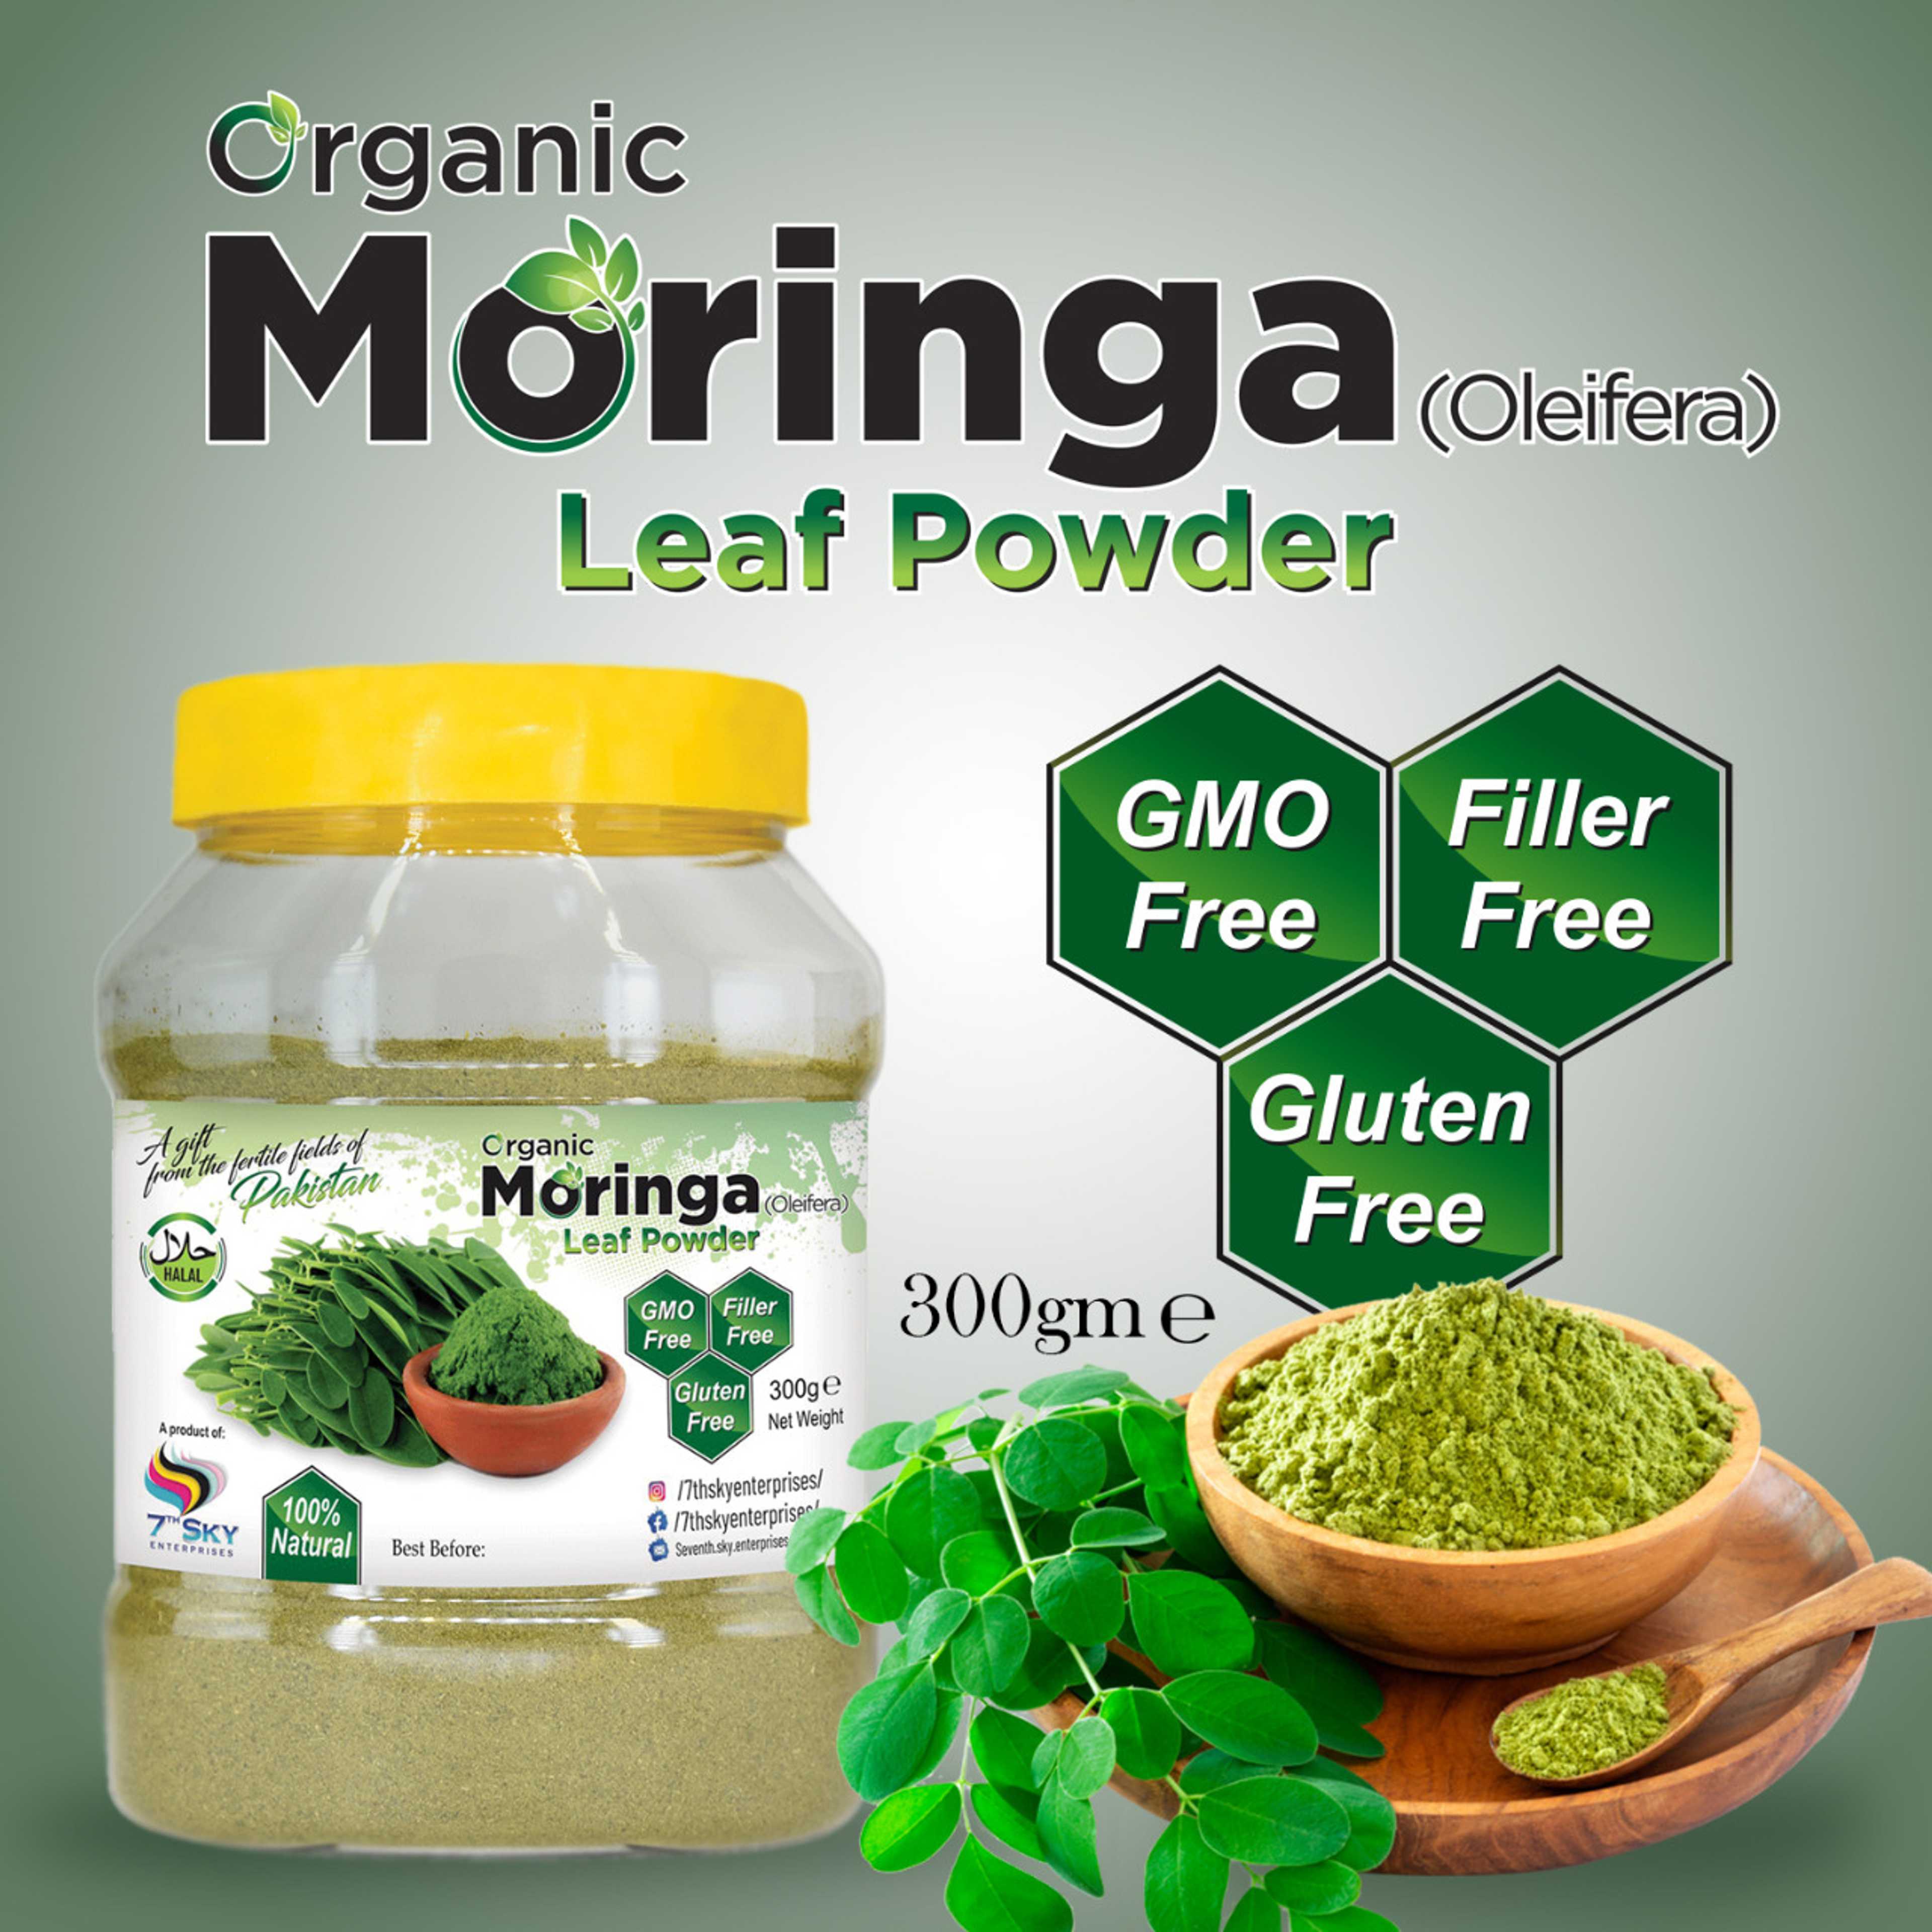 Organic Moringa (Oleifera) Leaf Powder 300g (Jar Pack)